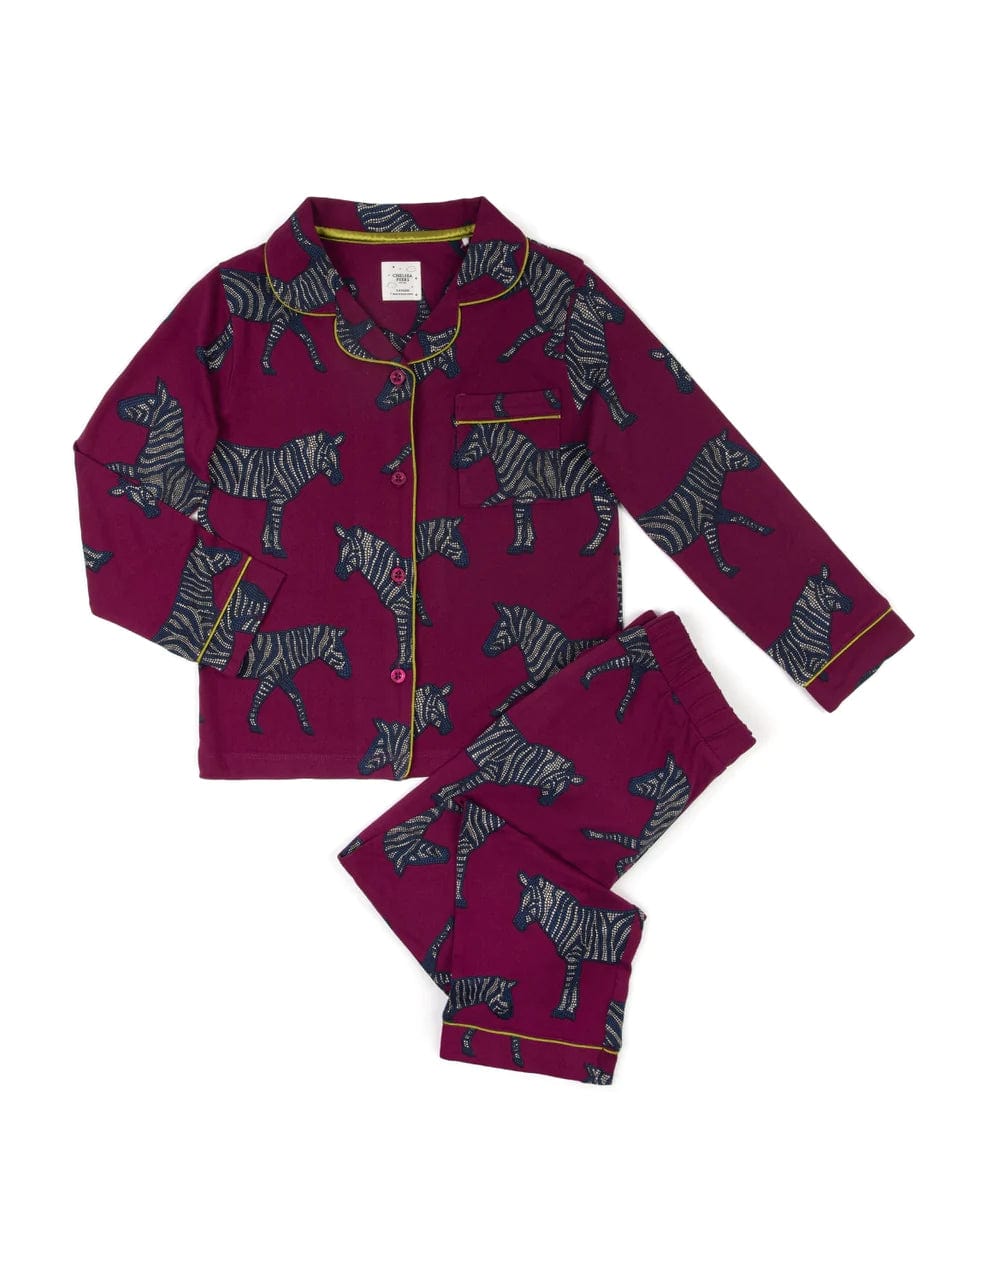 Chelsea Peers Kids' Purple Zebra Print Long Pyjama Set